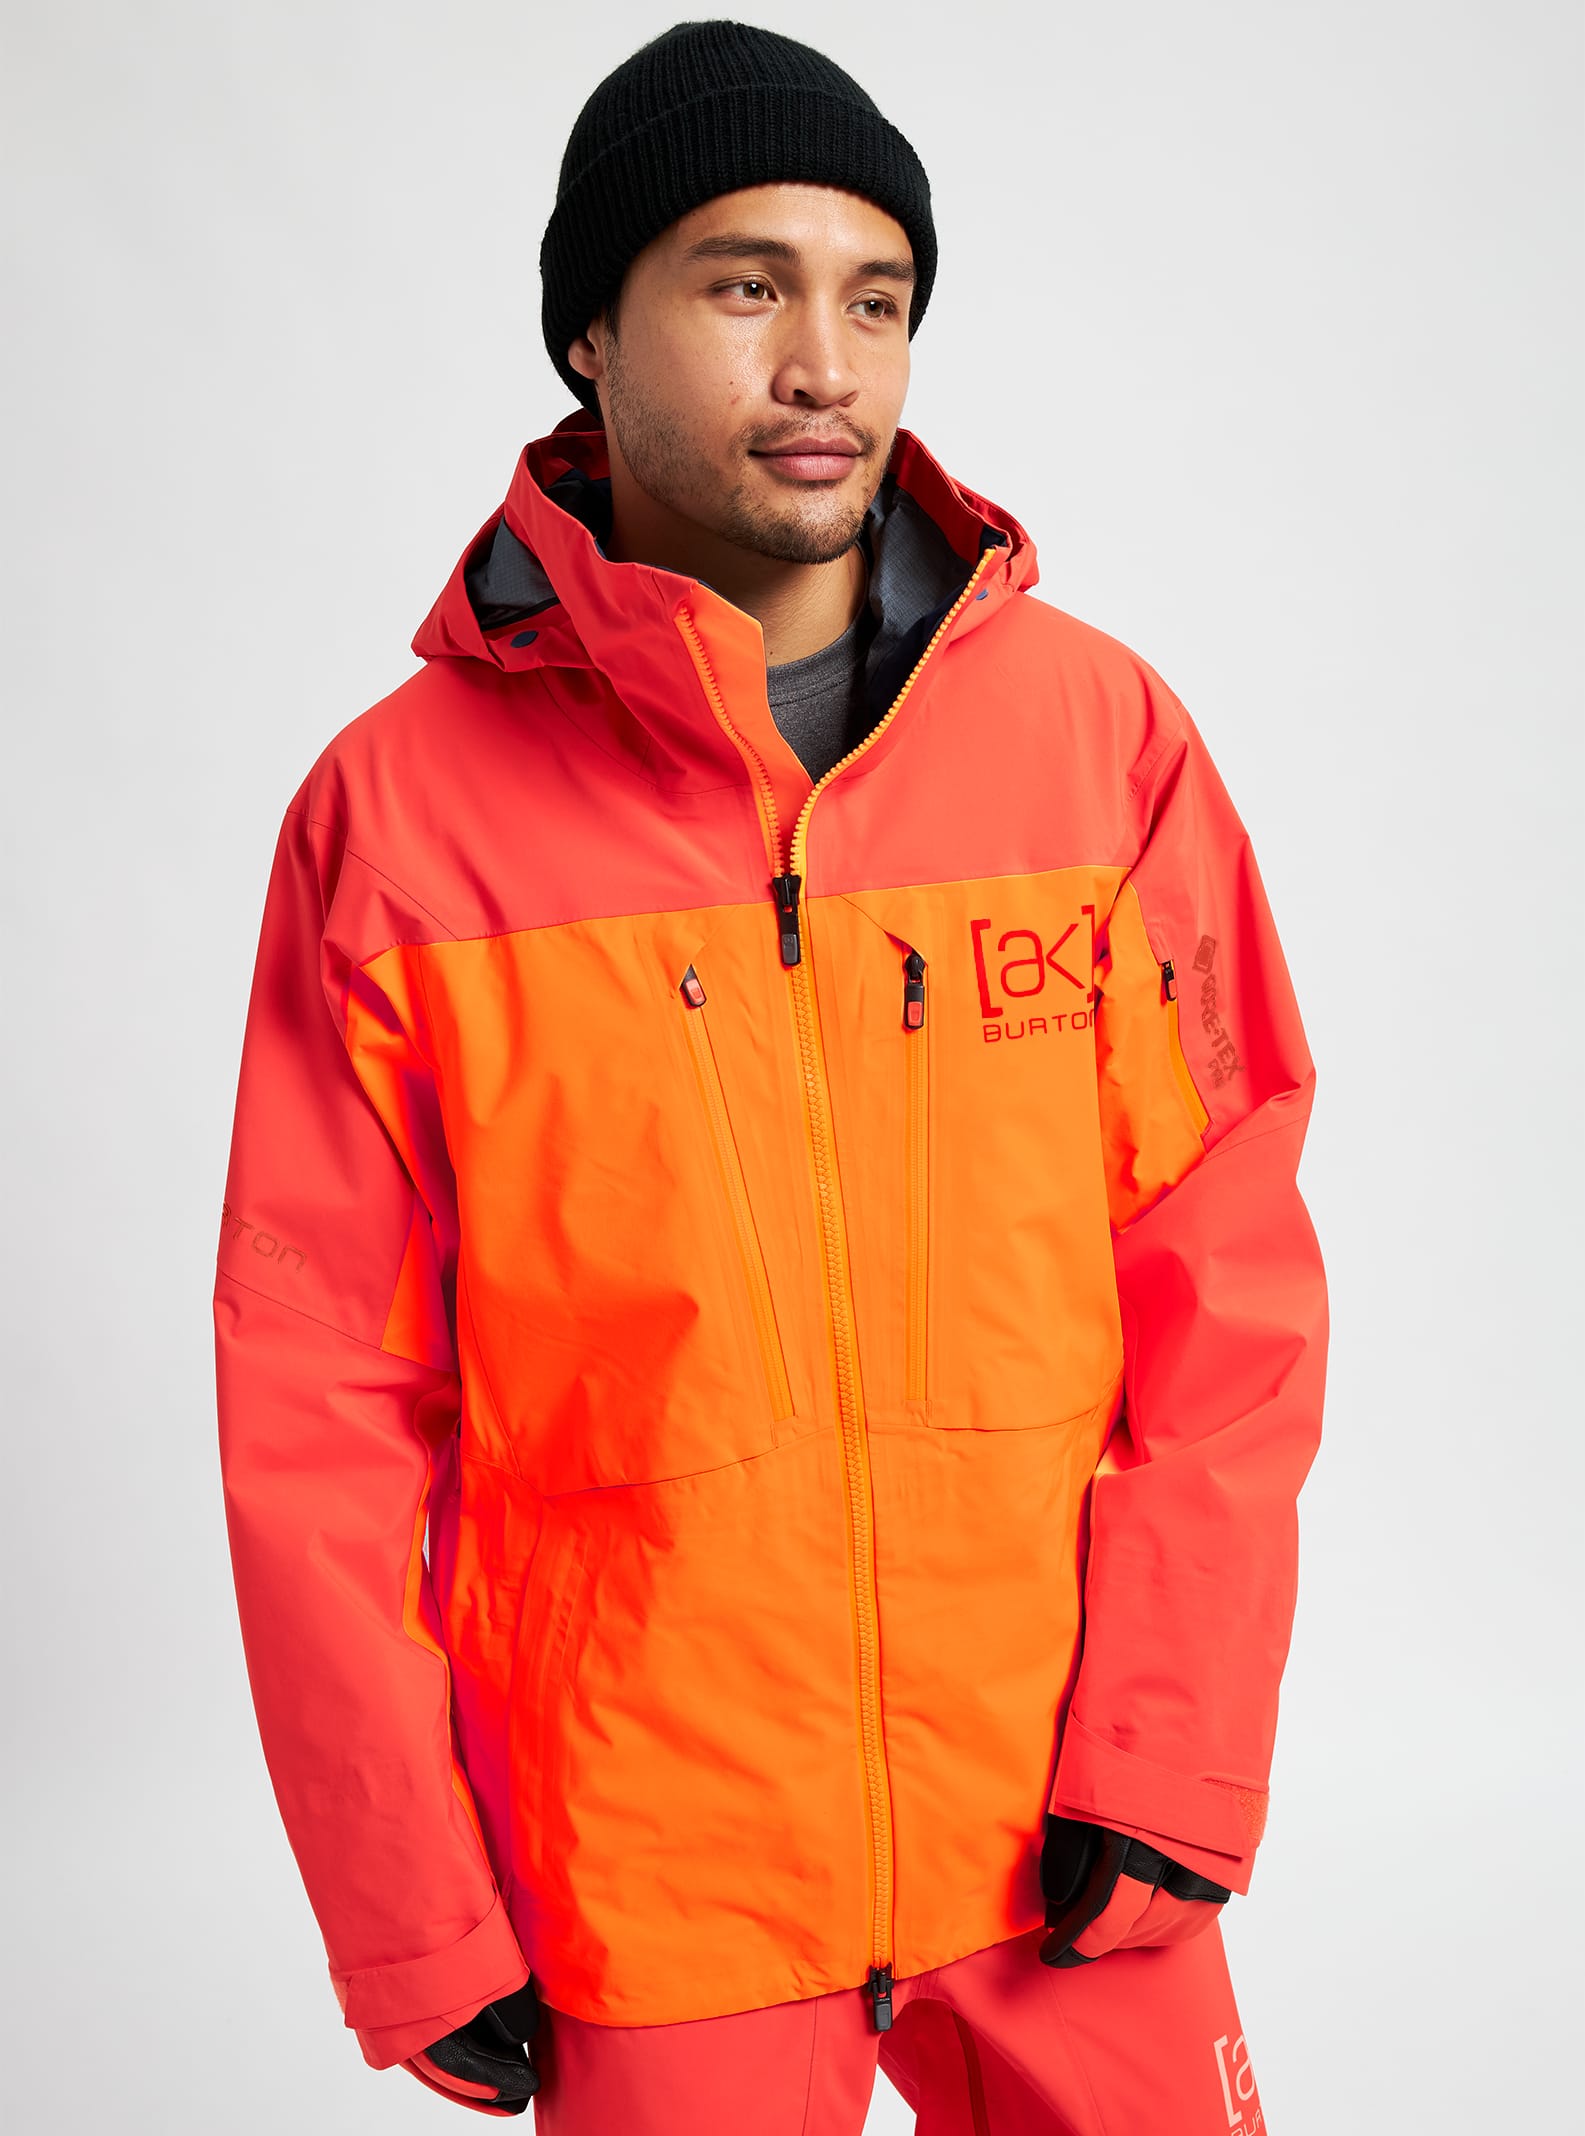 Men's Burton [ak] GORE‑TEX 3L PRO Hover Jacket | Burton.com Winter 2022 US